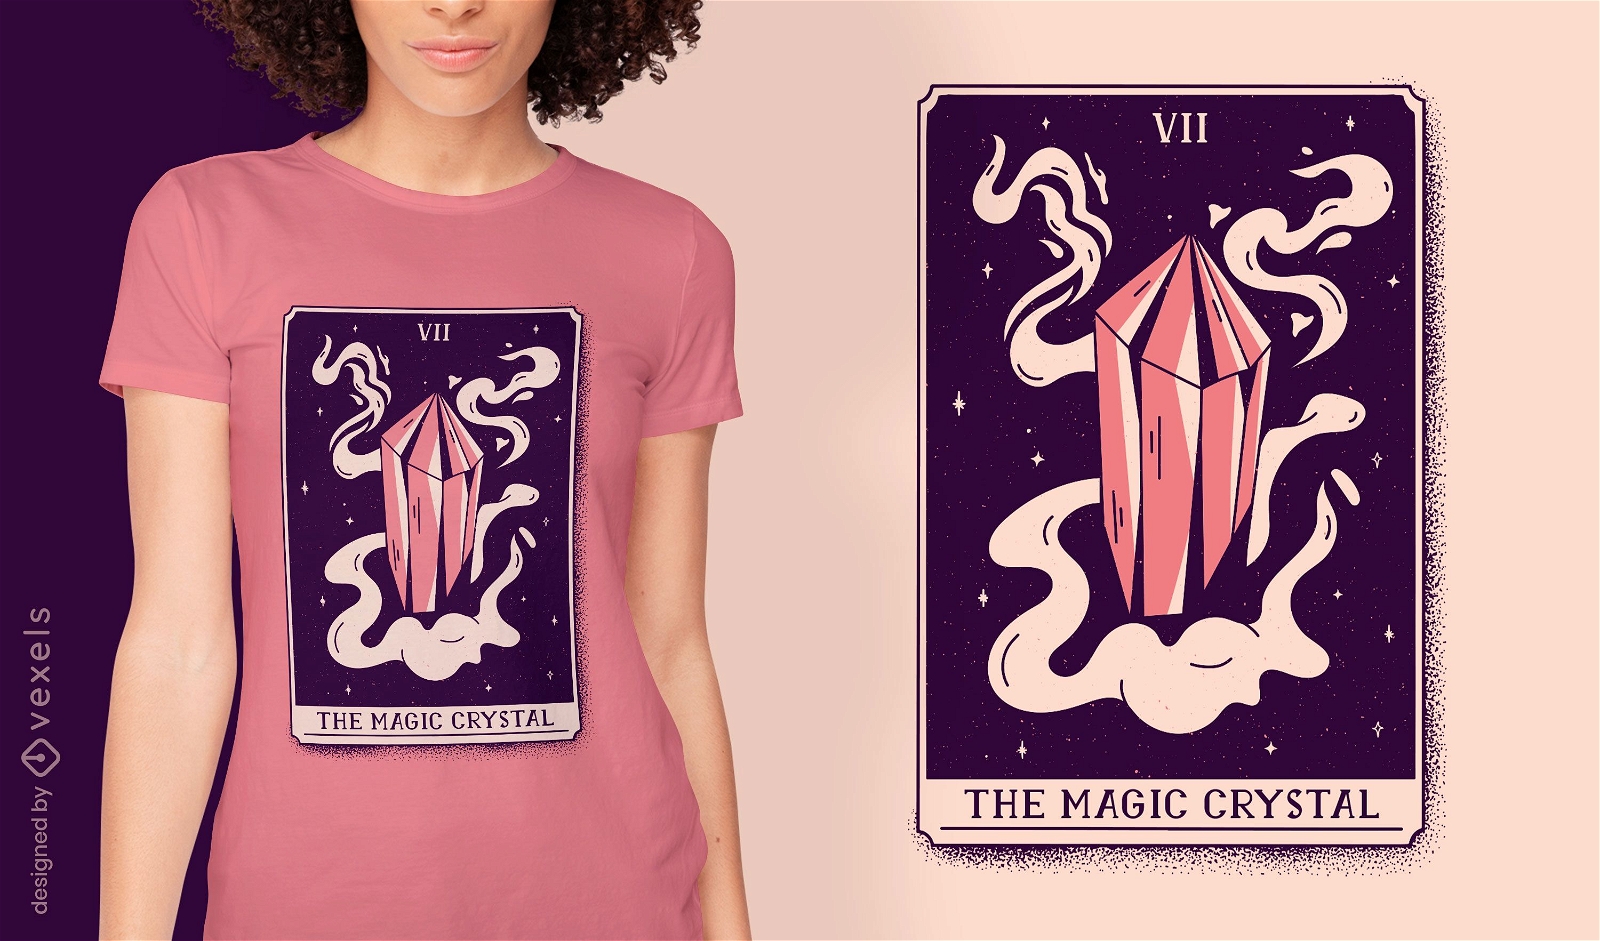 Diseño de camiseta de tarjeta de cristal mágico de tarot místico.